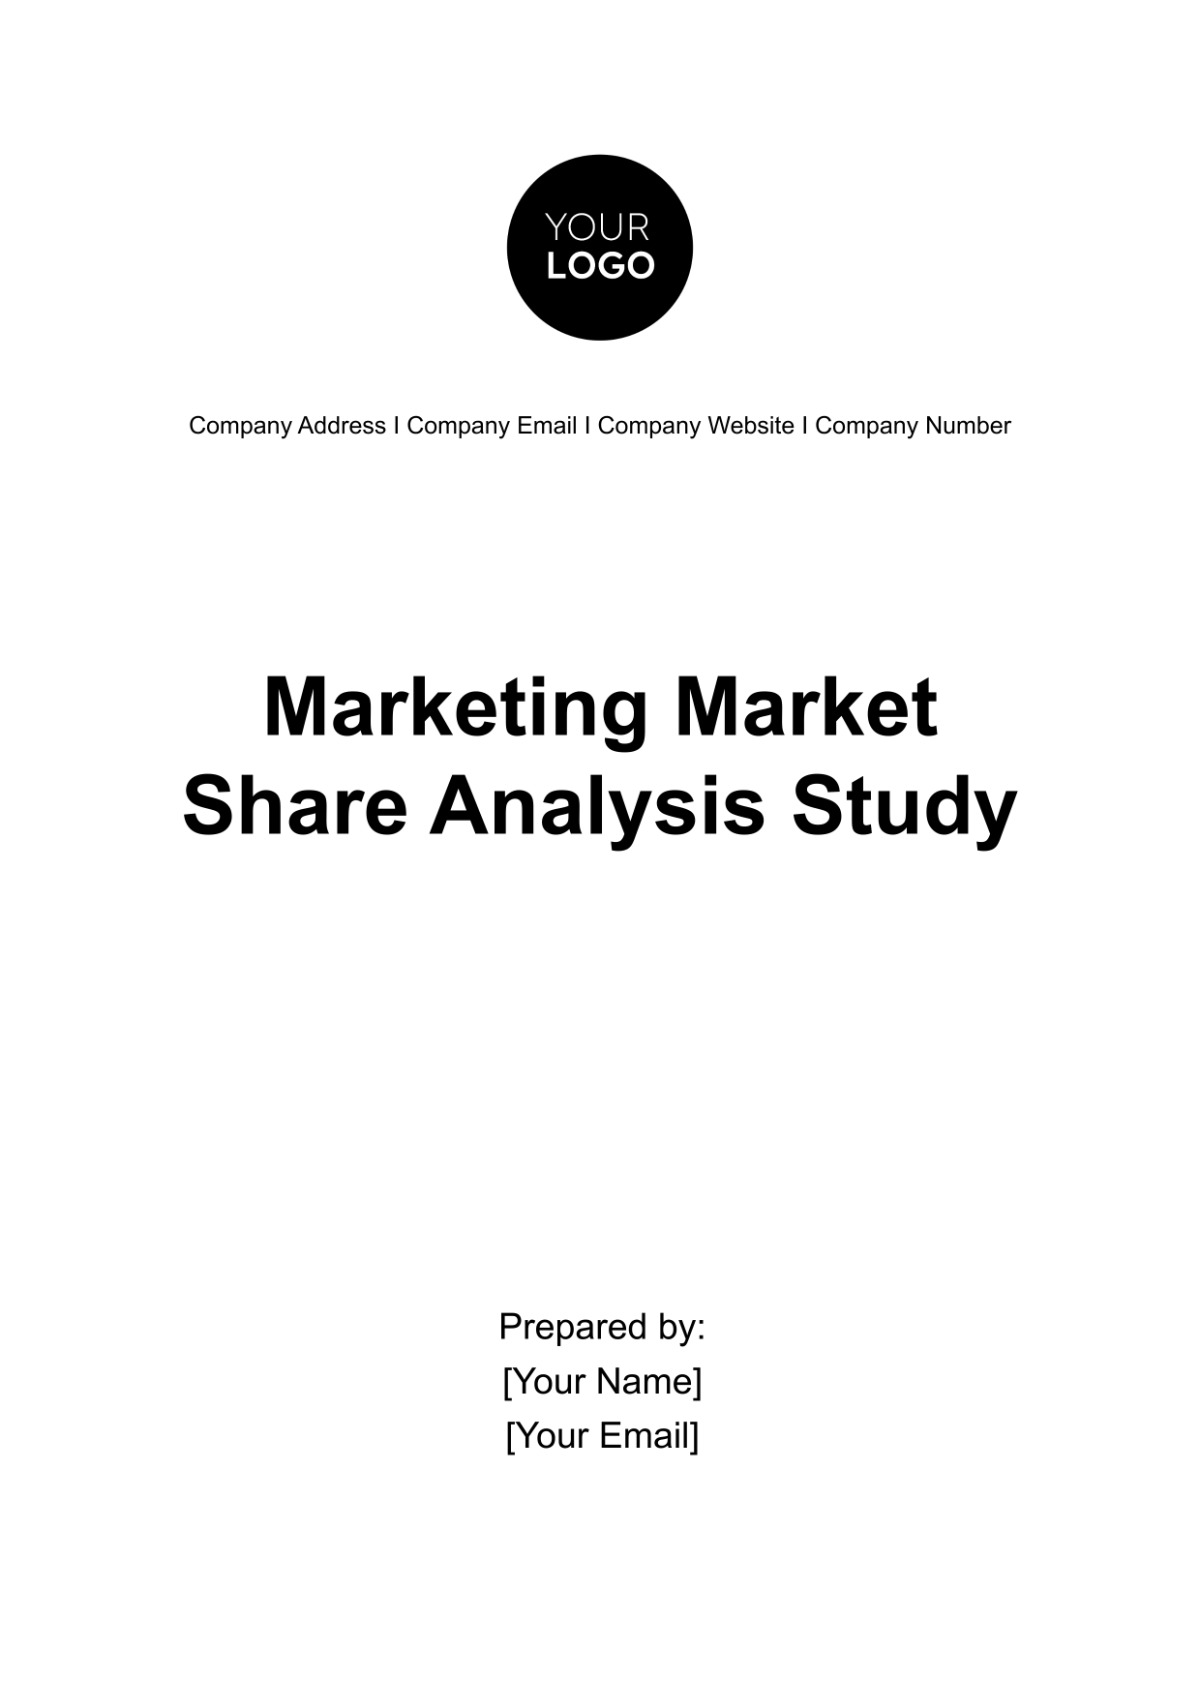 Free Marketing Market Share Analysis Study Template